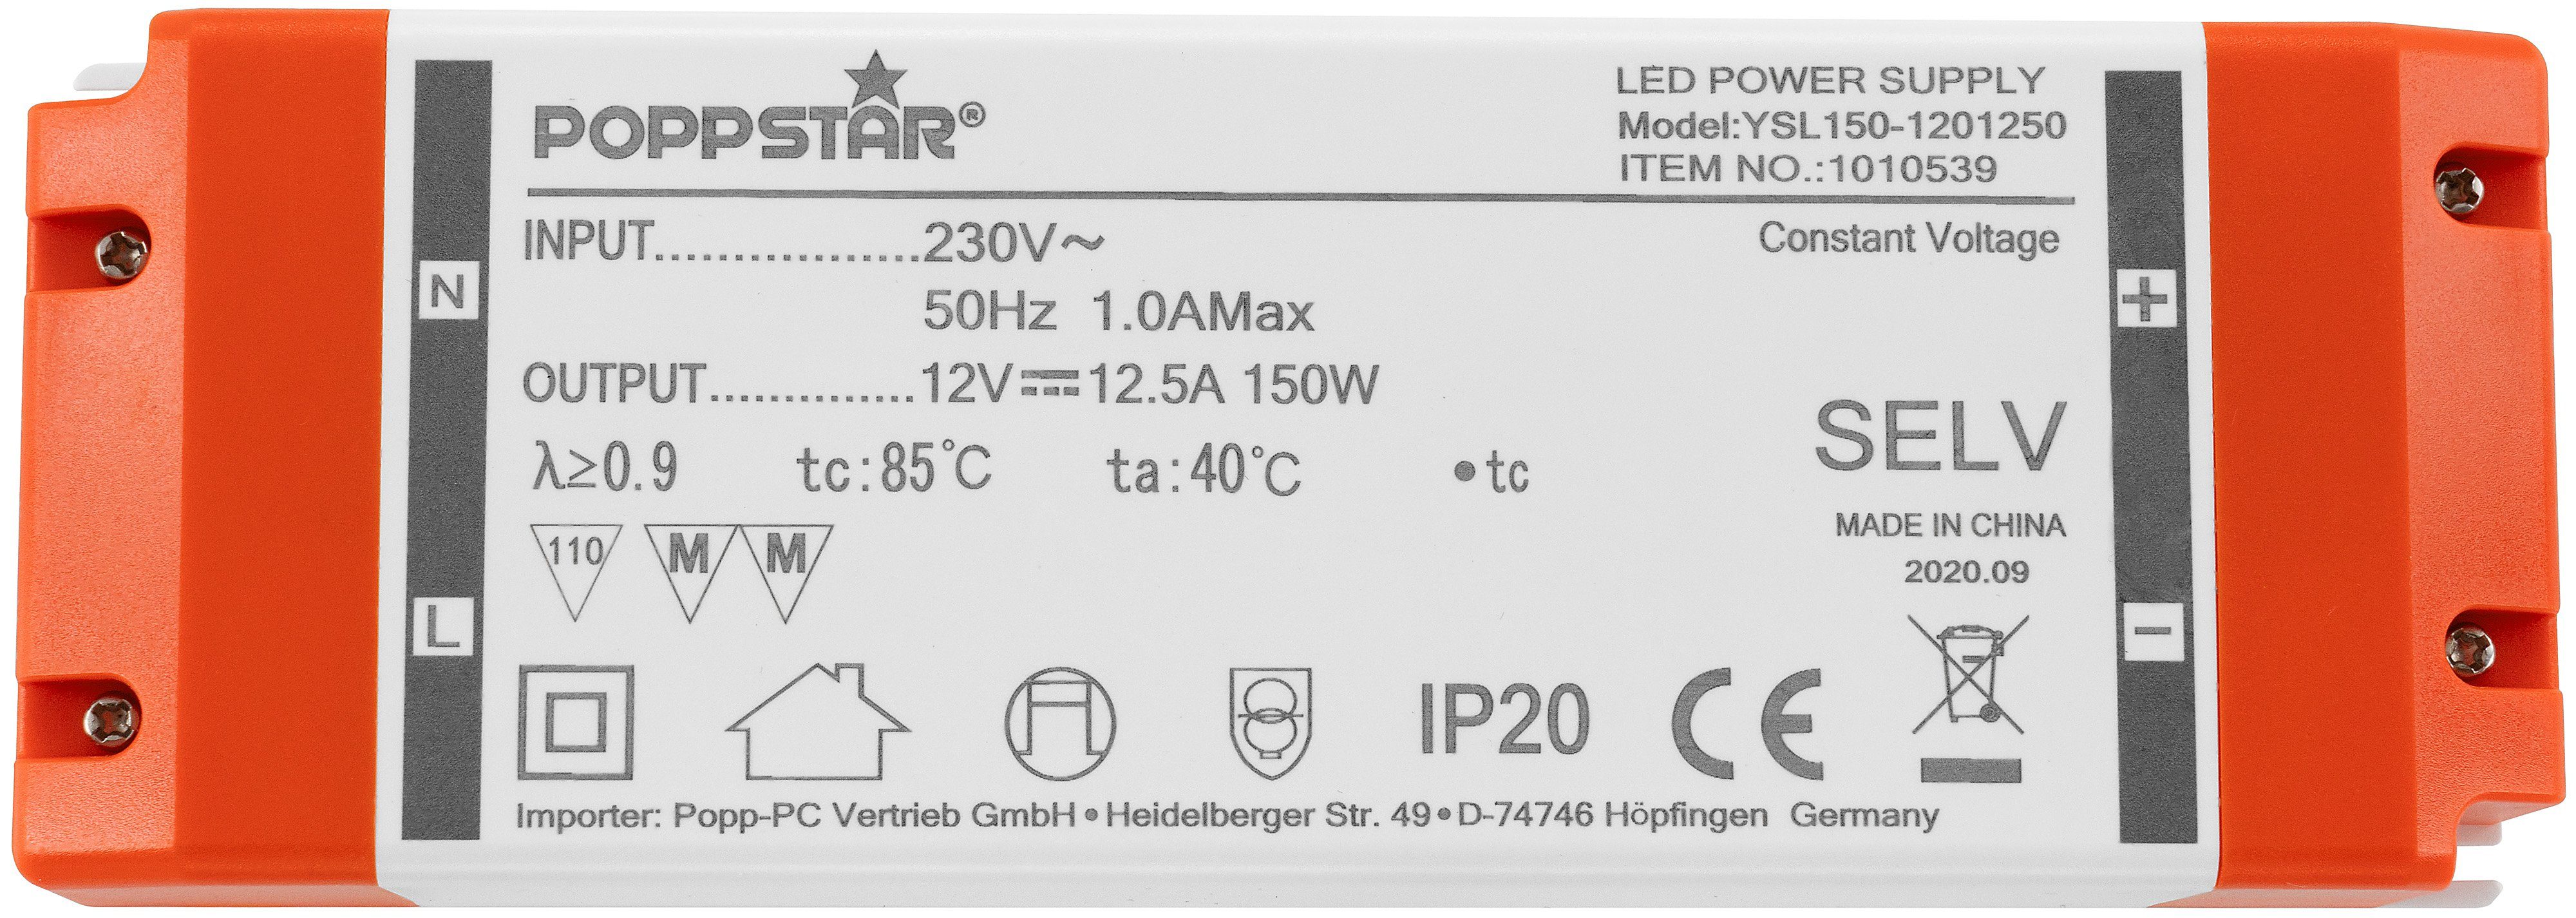 1,5 150 / Trafo 12V 230V LED LEDs) für bis Trafo AC 12,5A Poppstar (12V W Watt DC LED Transformator